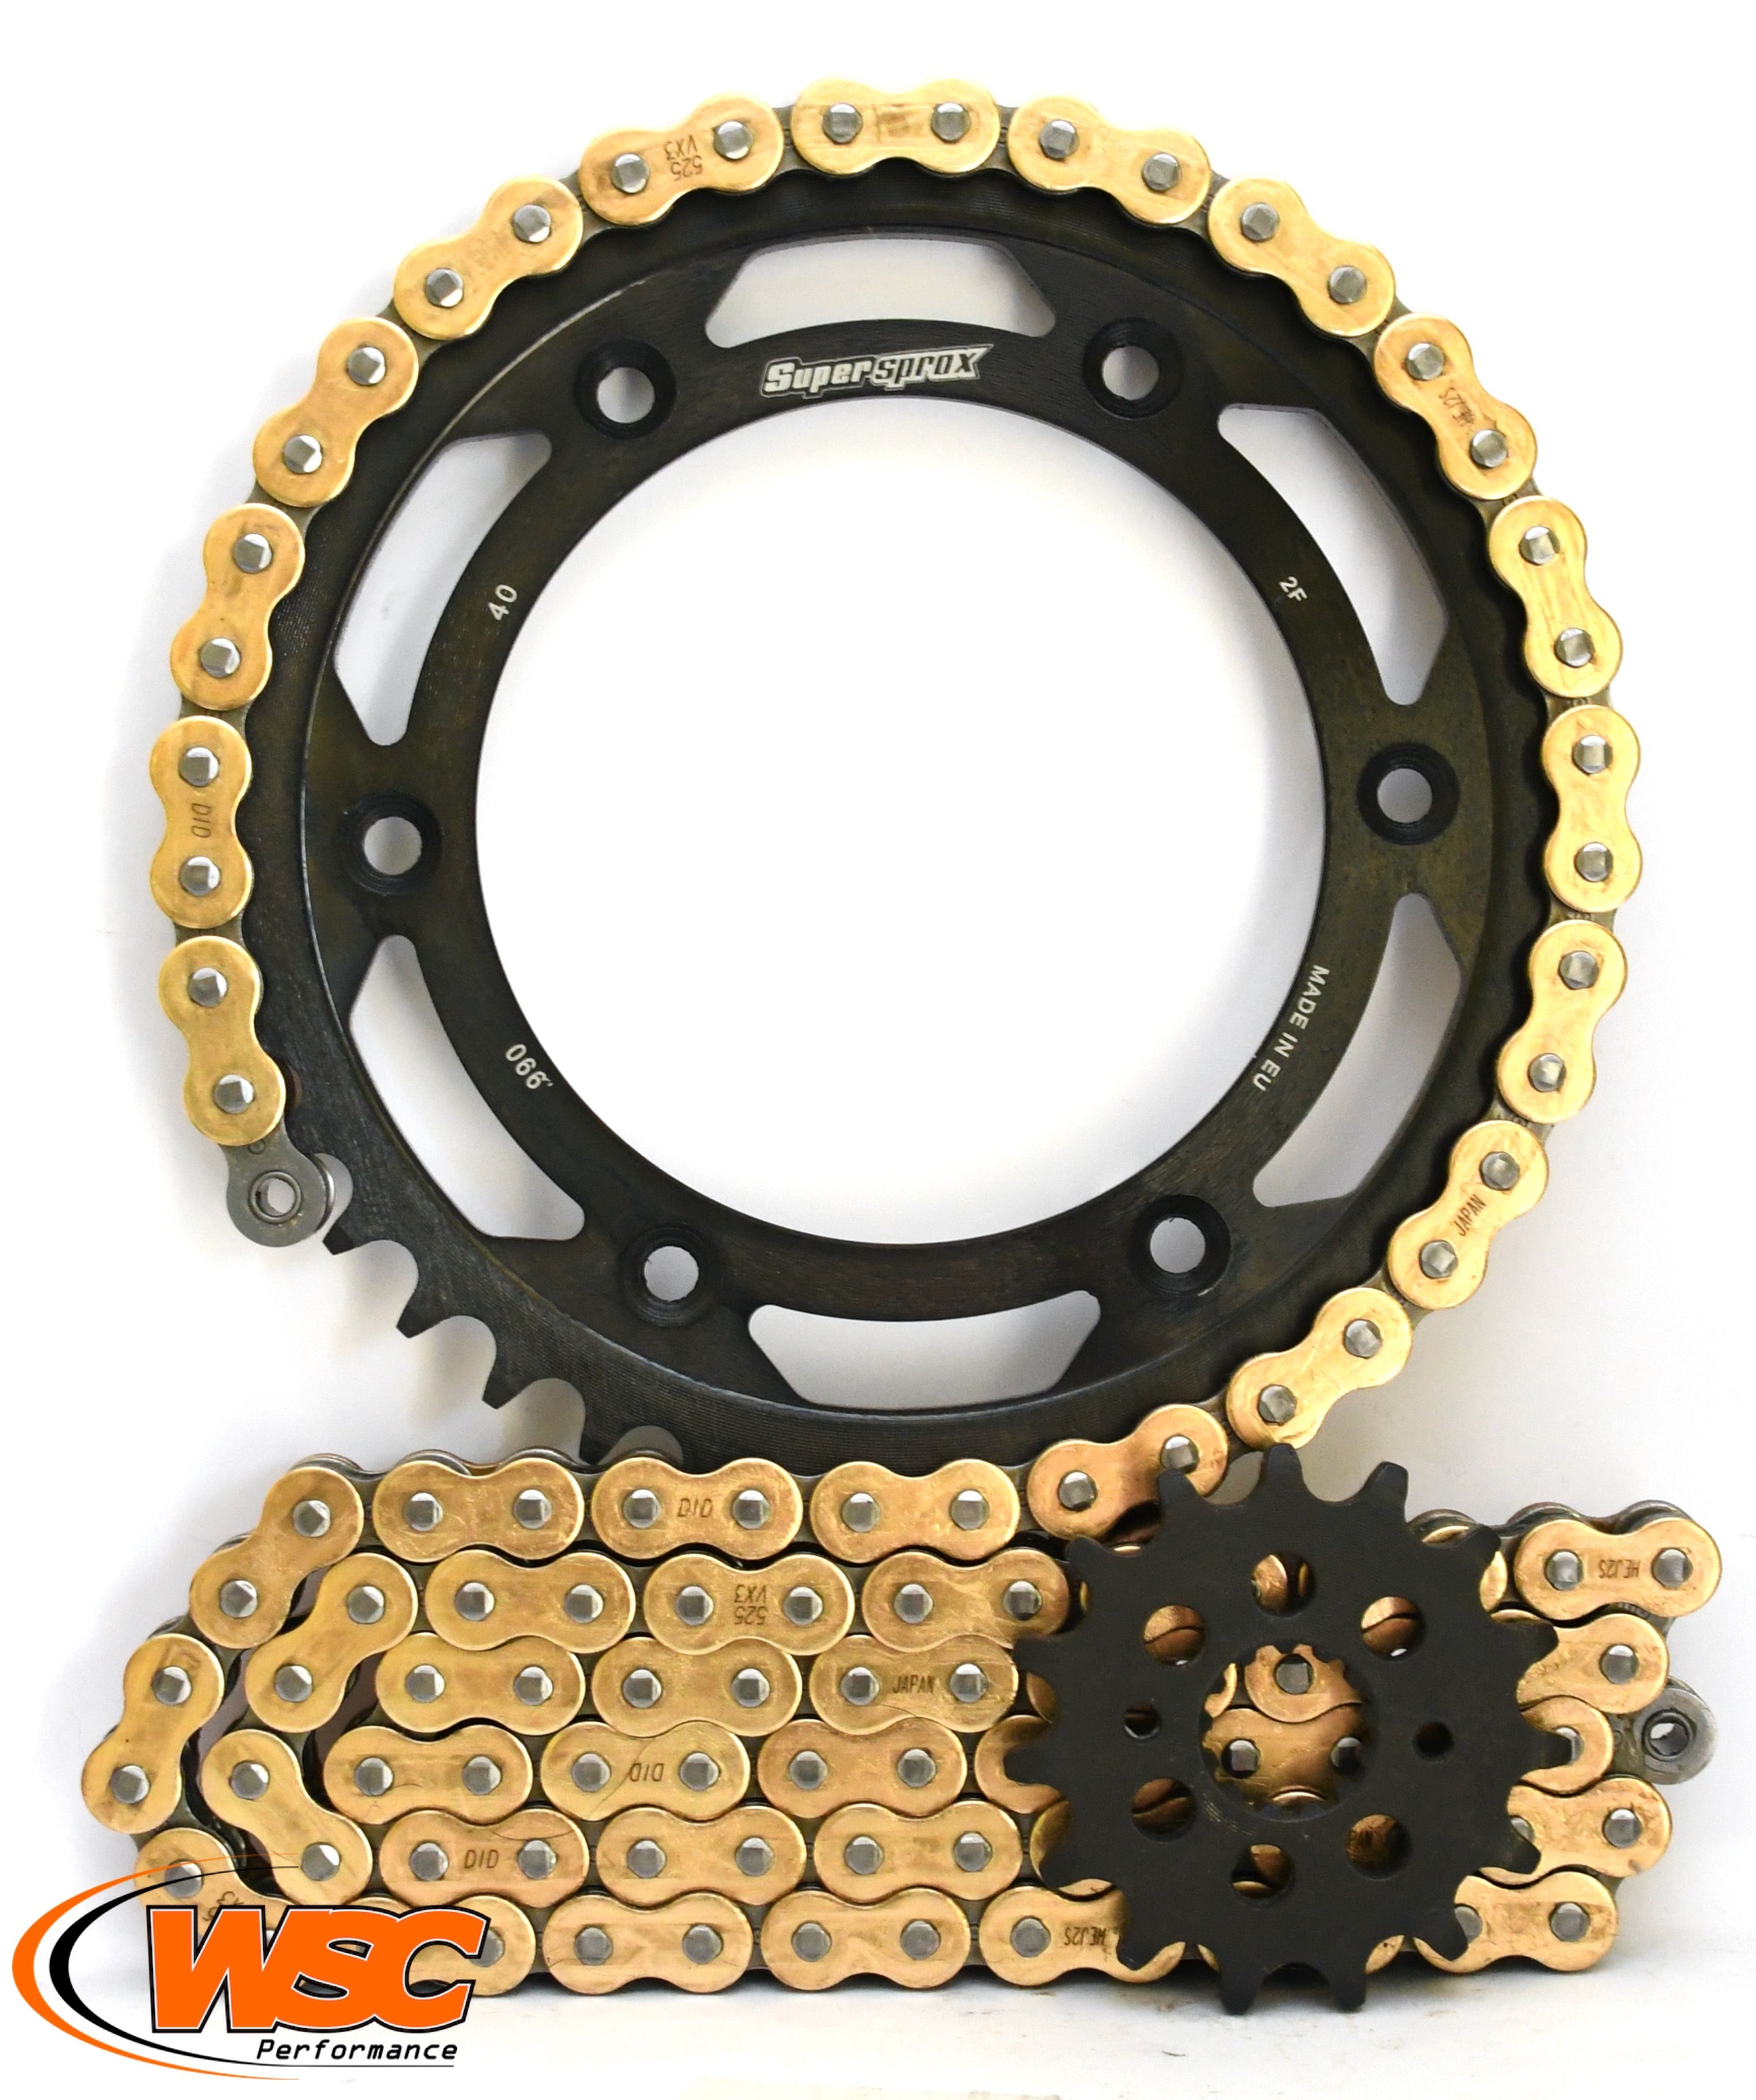 Supersprox Chain & Steel Sprocket Kit for KTM 690 SMC (Inc R) - Standard Gearing